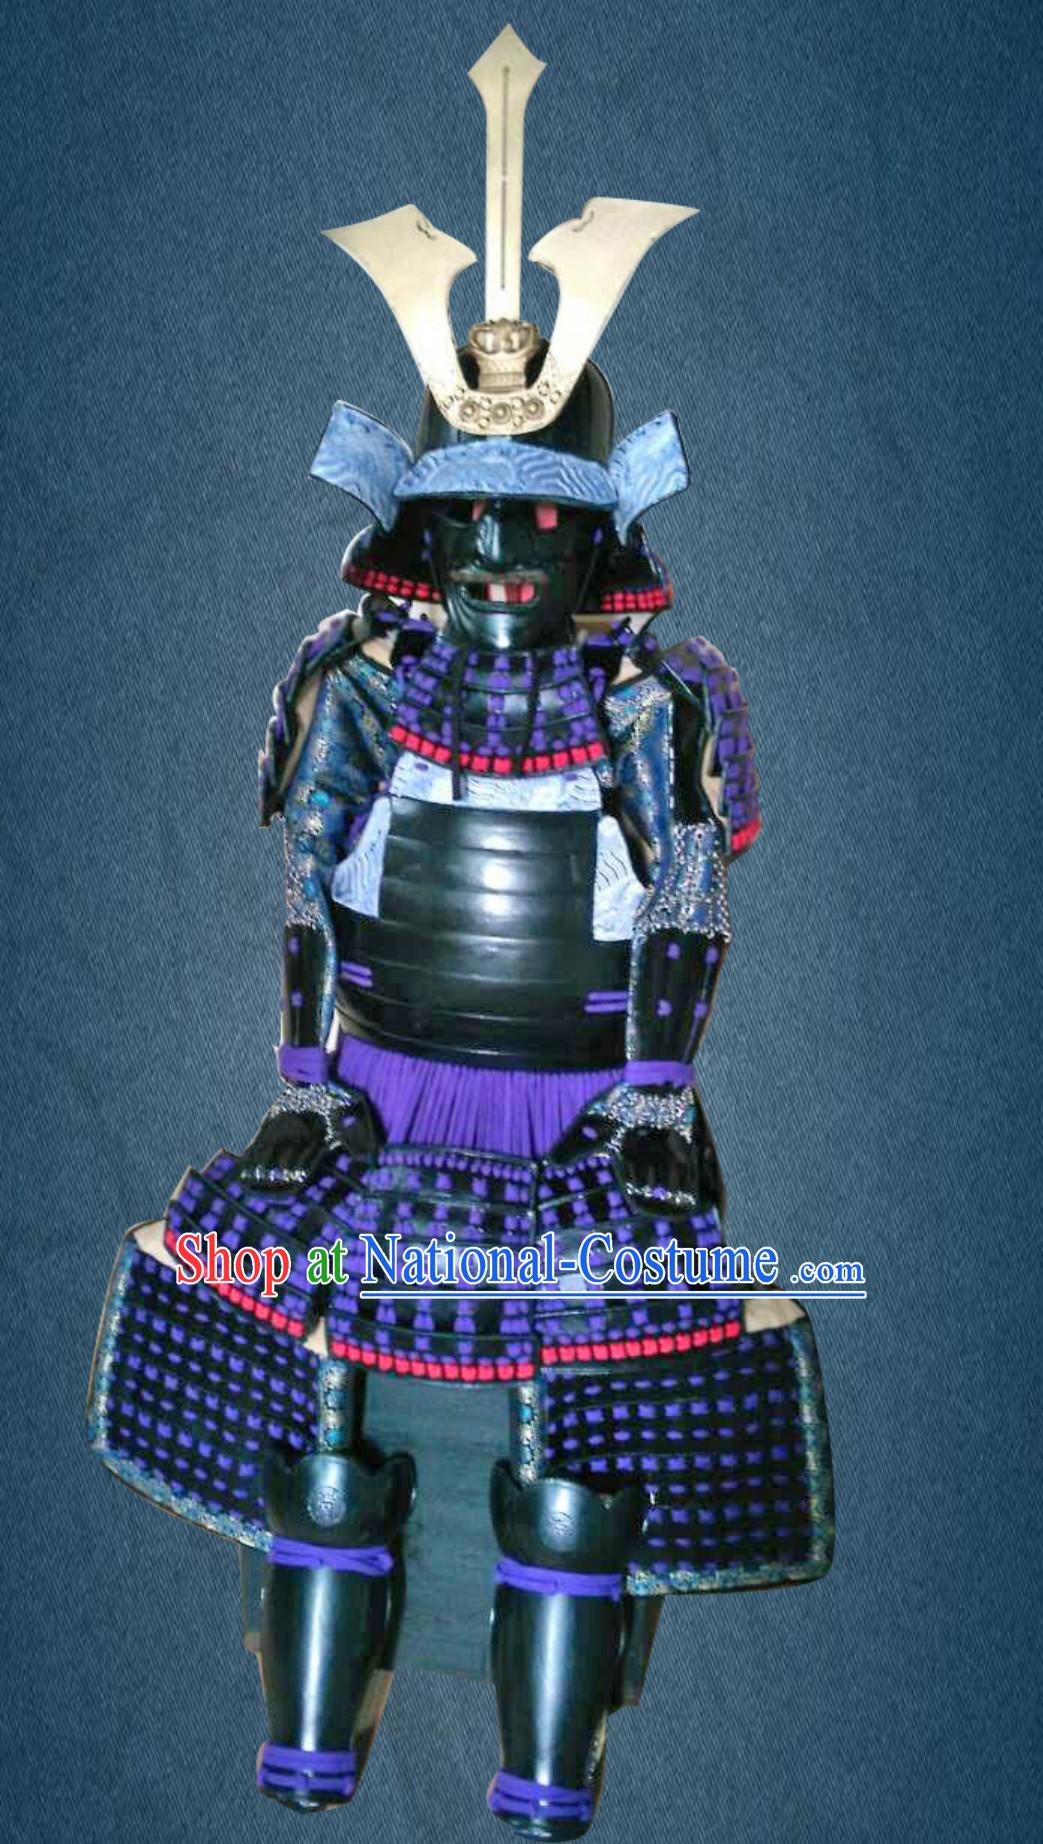 Authentic Japanese Samurai Armor Japanese Samurai Body Armor Custom Japanese Samurai Armor Full Complete Set